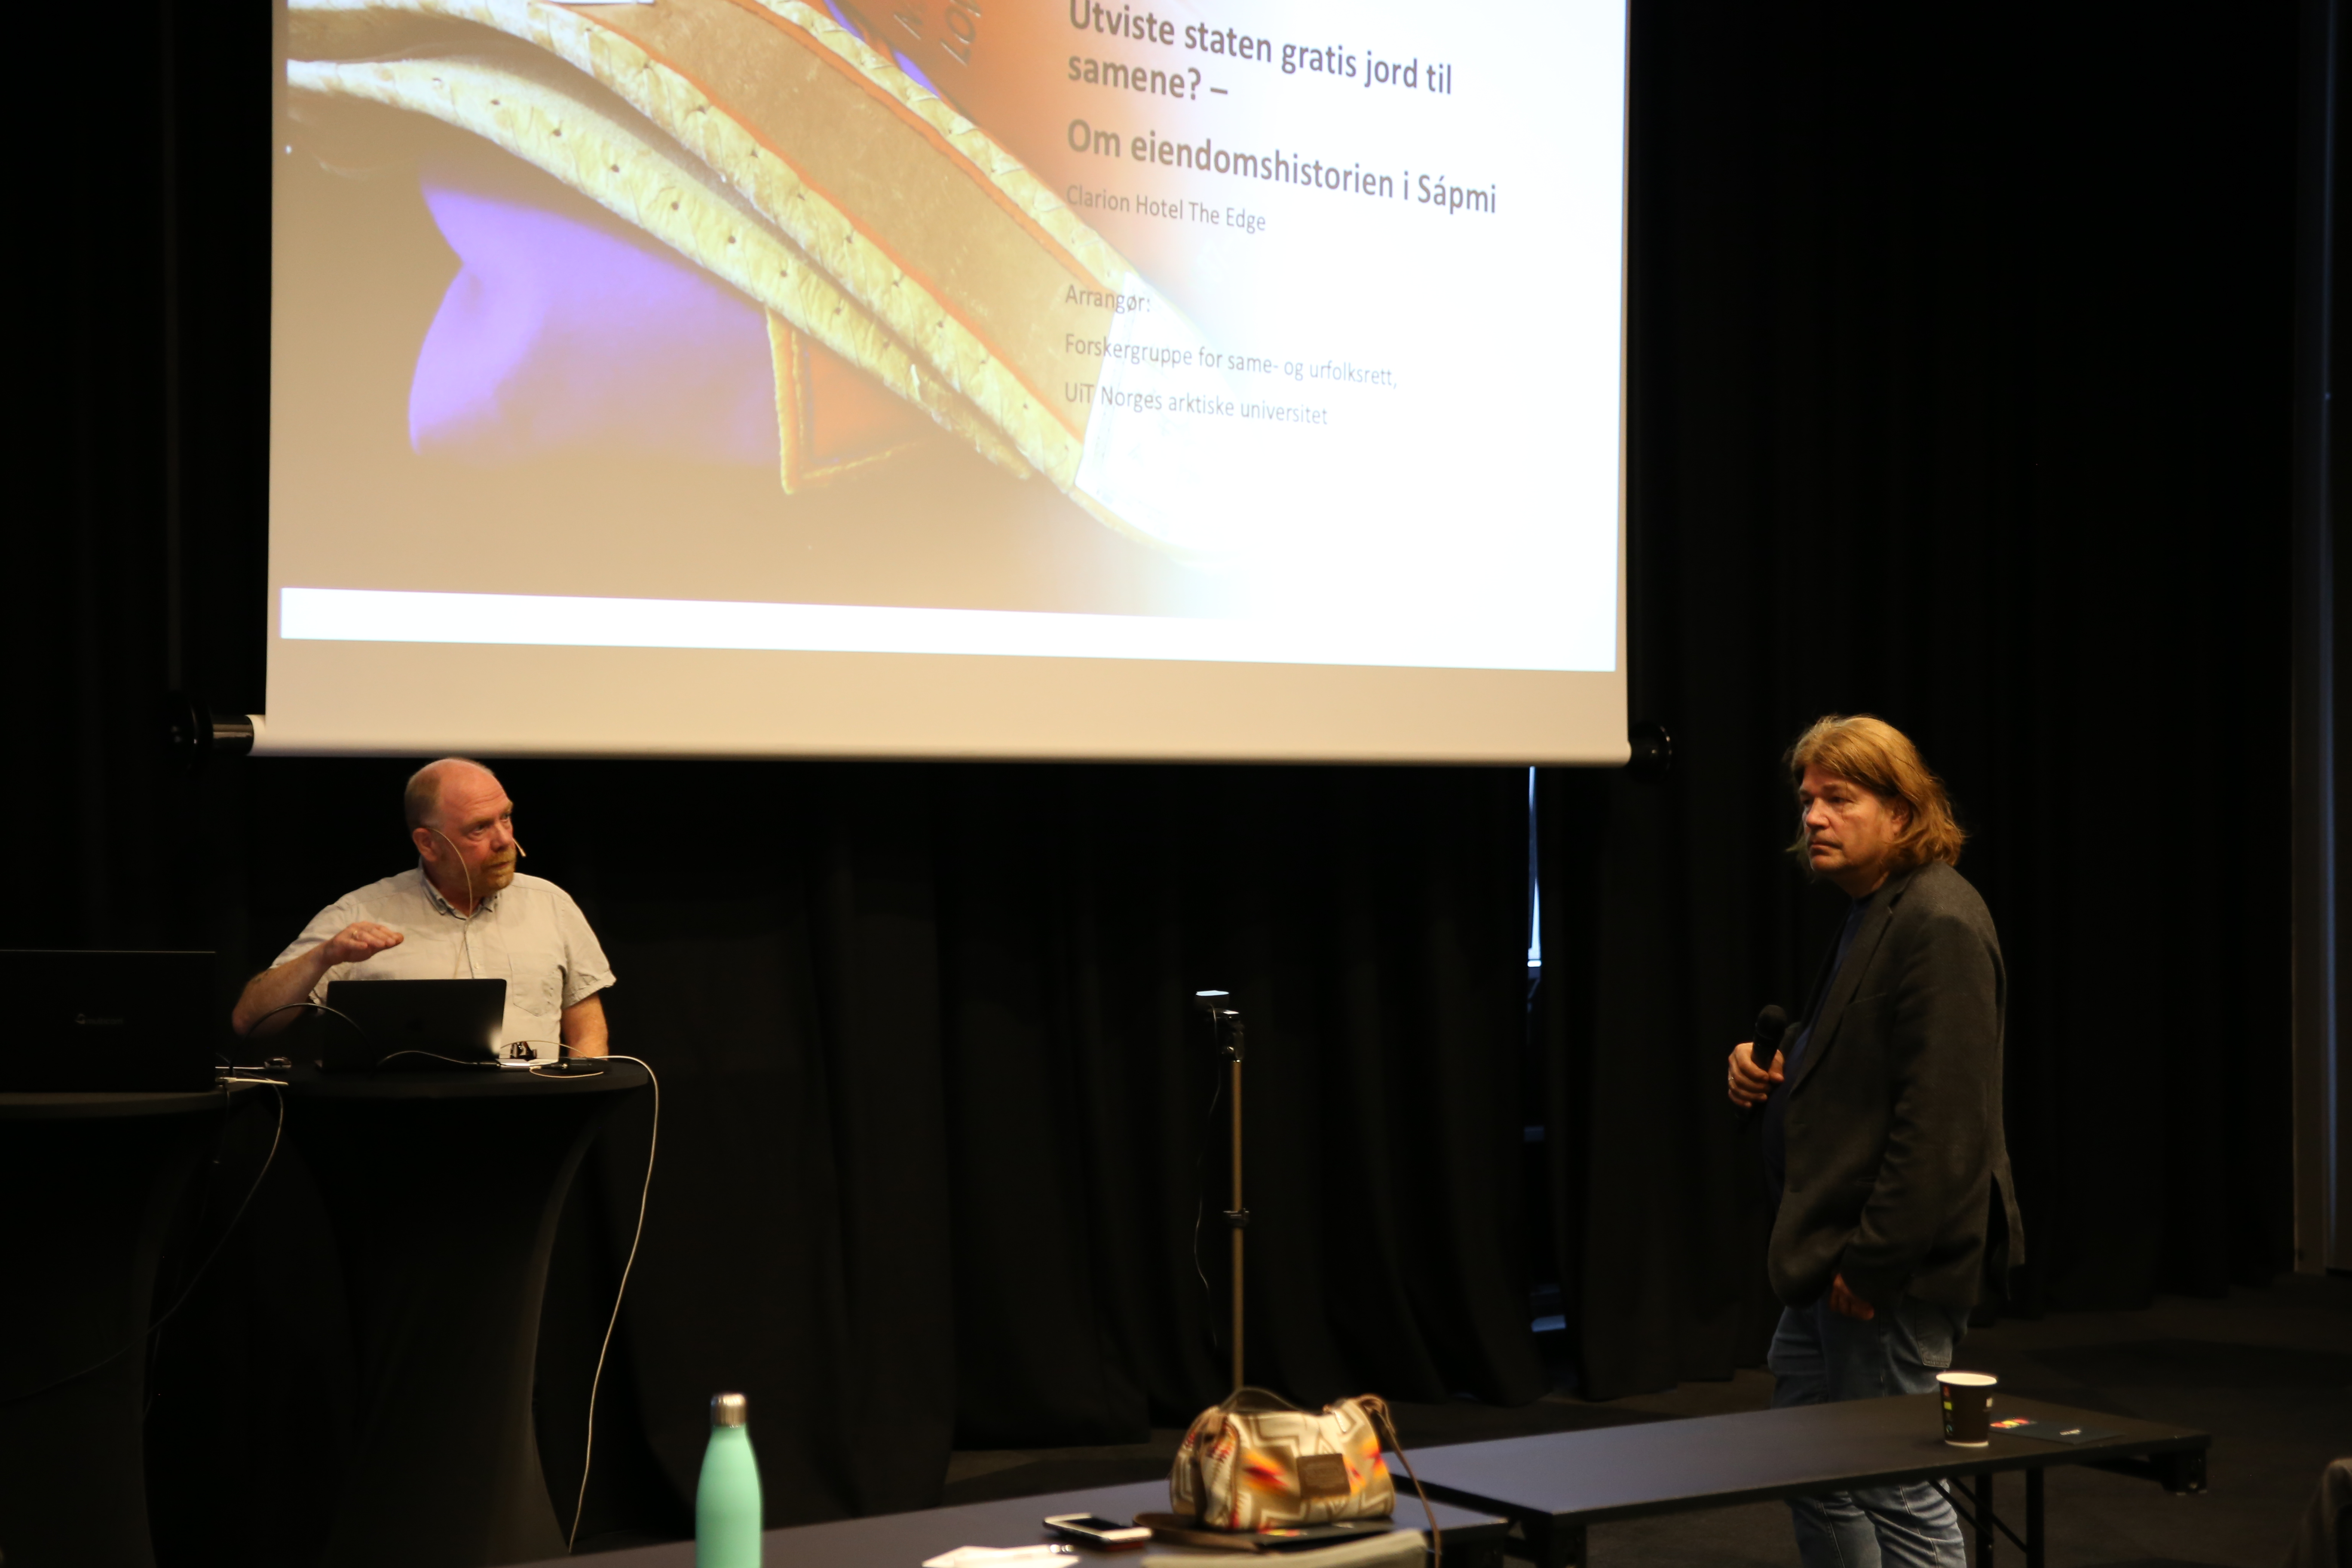 Gunnar Eriksen og Harald Lindback er i samtale. De står begge foran et lerret med en presentasjon på. 